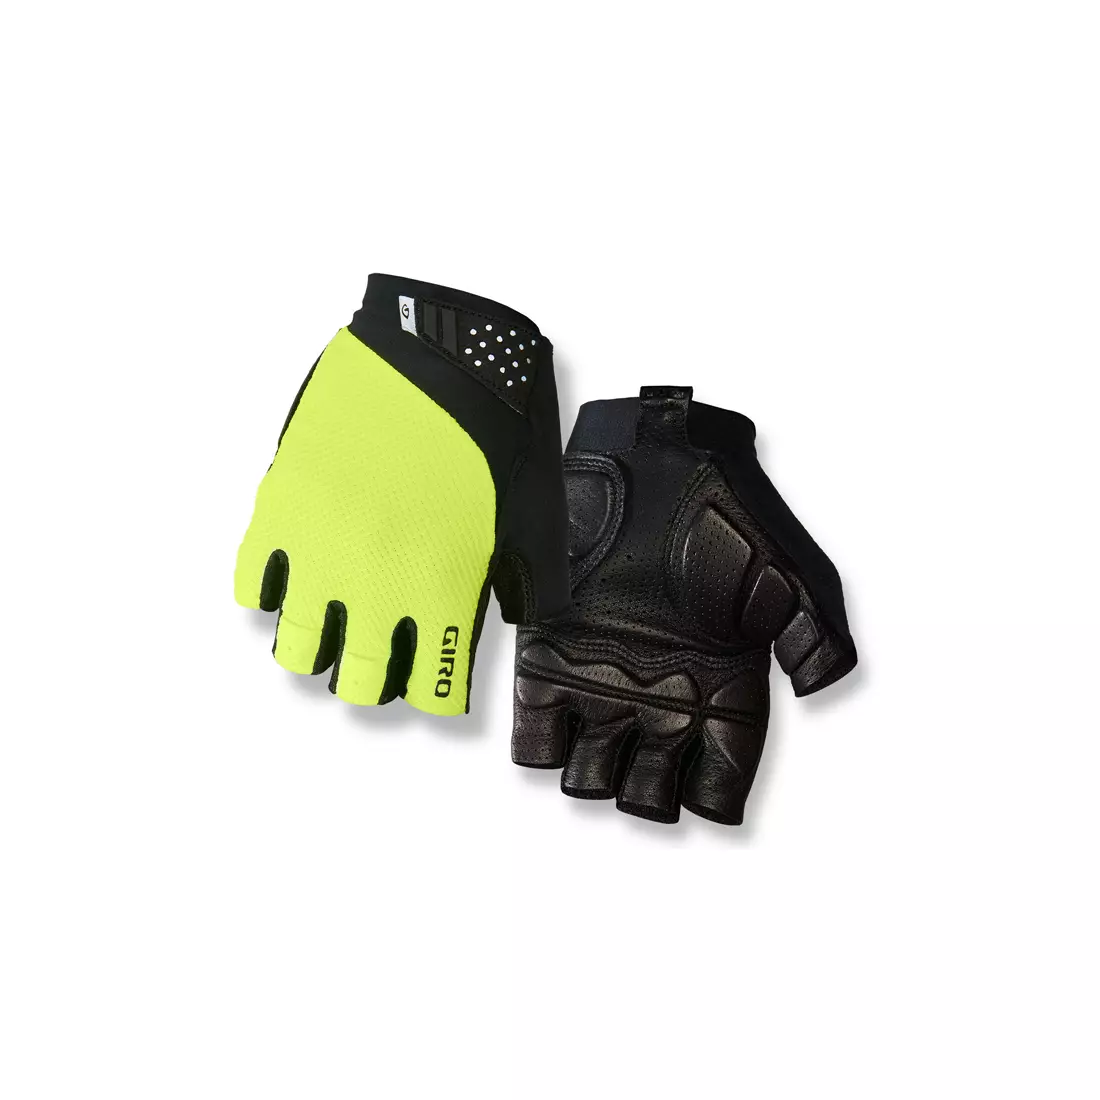 GIRO MONACO II mănuși de ciclism, negre și galben fluo